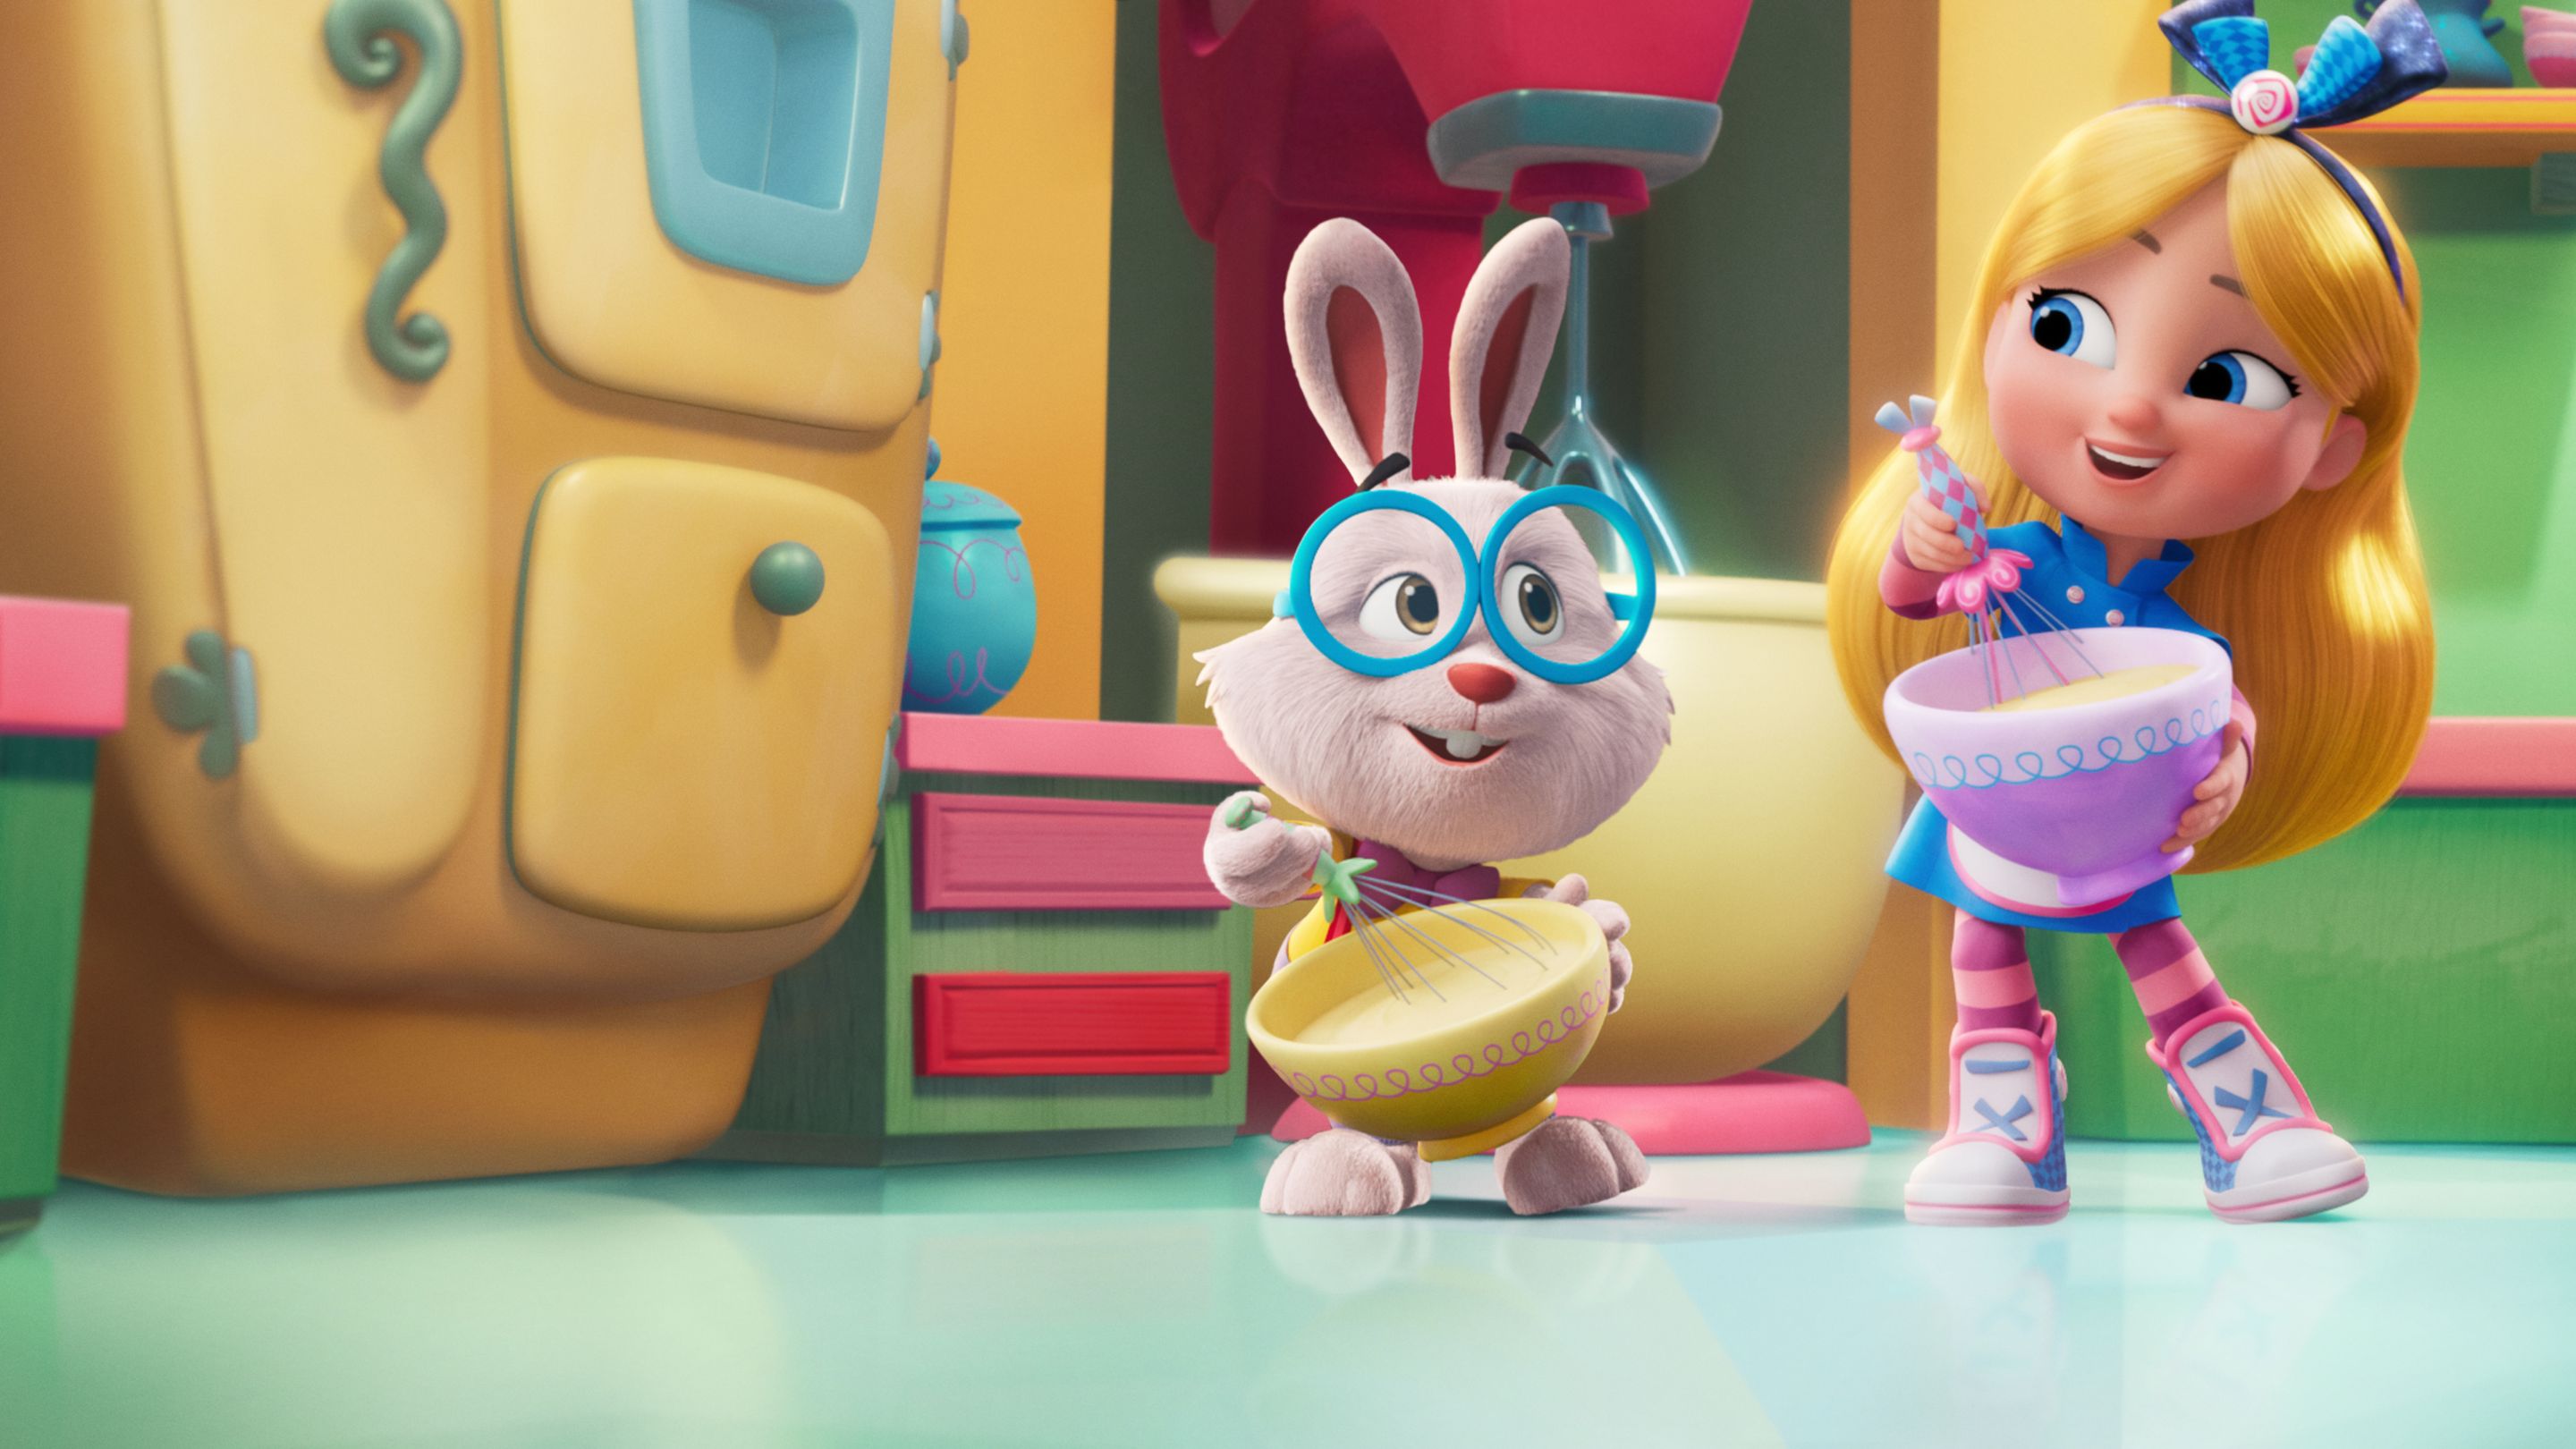 Alice's Wonderland Bakery' Series Coming to Disney Junior - Inside the Magic